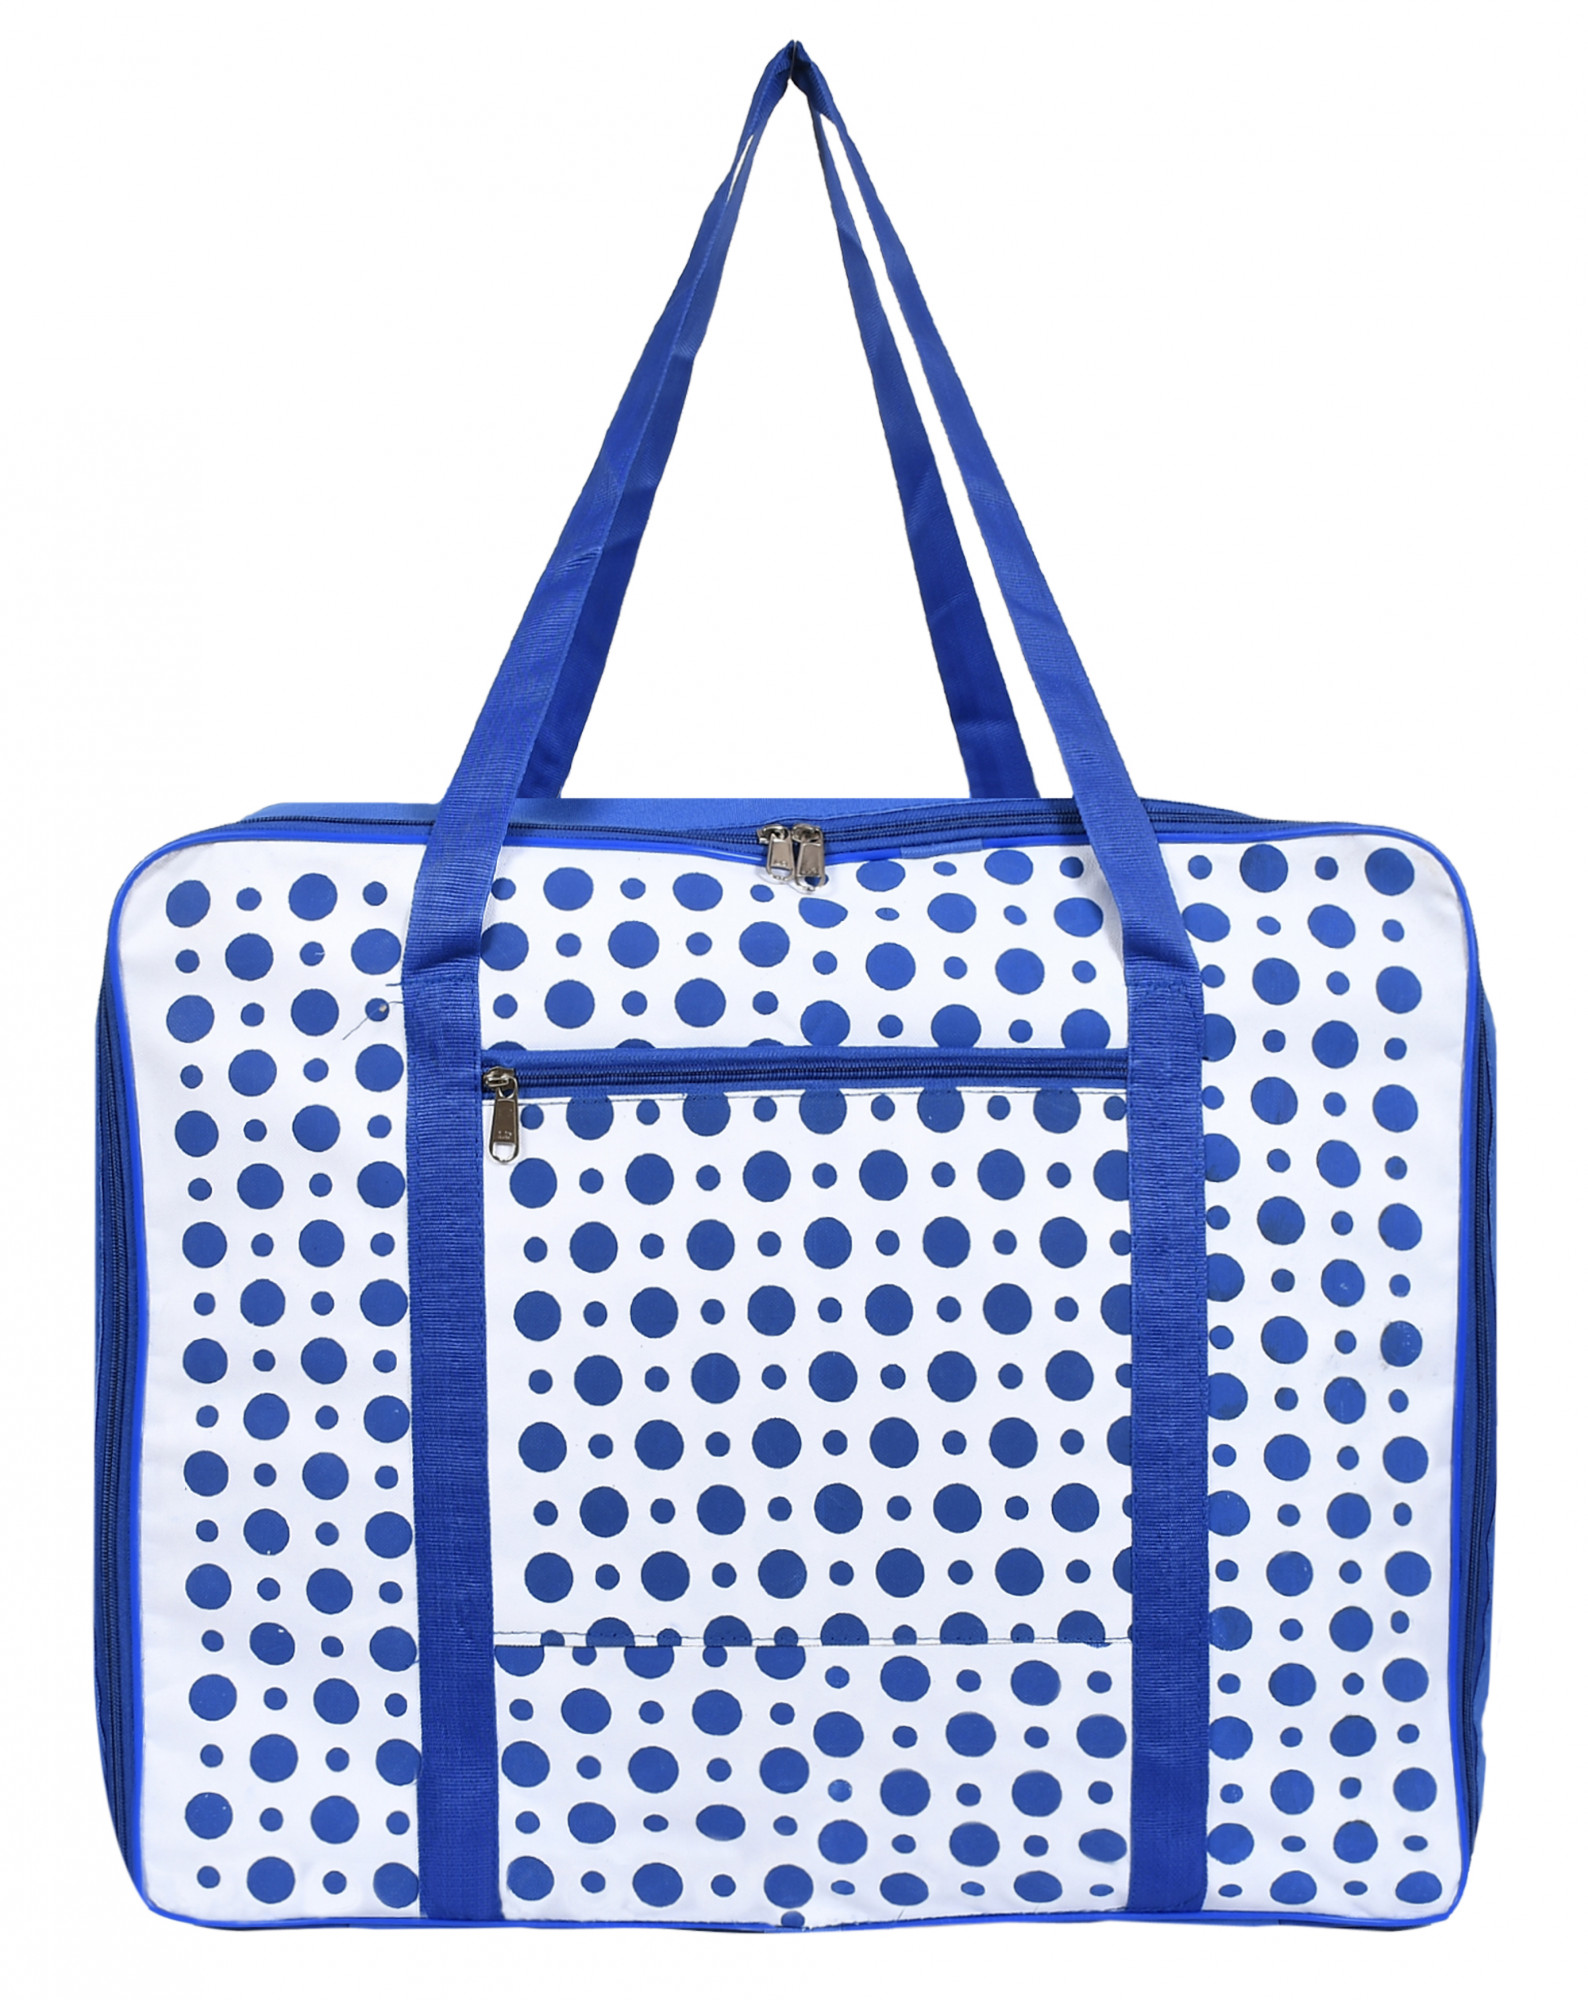 Kuber Industries Dot Printed Large Size Foldable Travel Duffle Bag, Underbed Storage Bag, Wardrobe organizer, Cloth Bag,Hospital Bag, Weekender Bag, Overnight Bag, Carry On Bag, Luggage And Sports Duffle Bag- Pack of 2 (Blue & White)